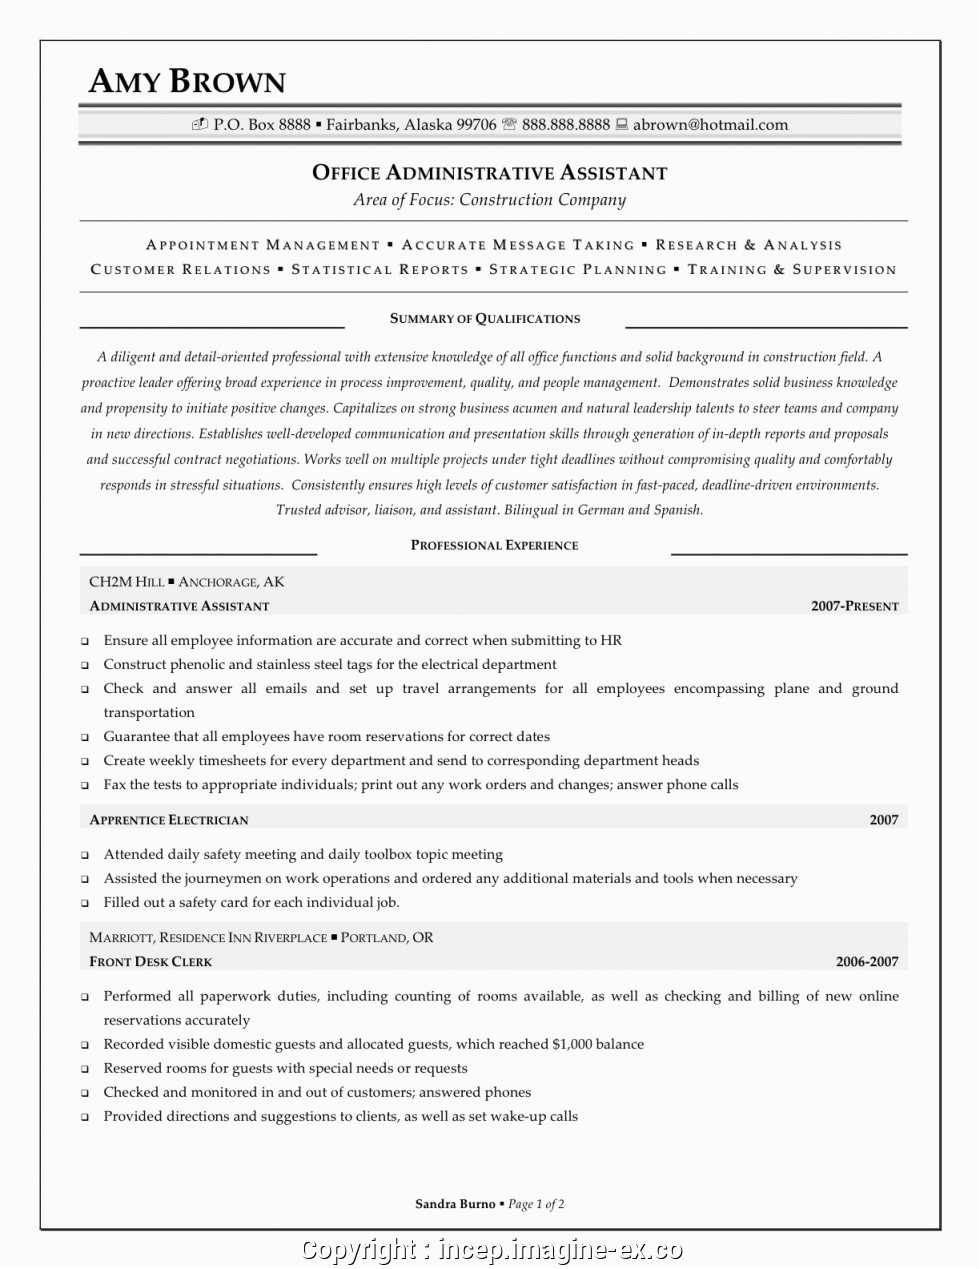 Sample Resume for Administrative assistant Office Manager Creative Fice Administrative assistant Resume Sample